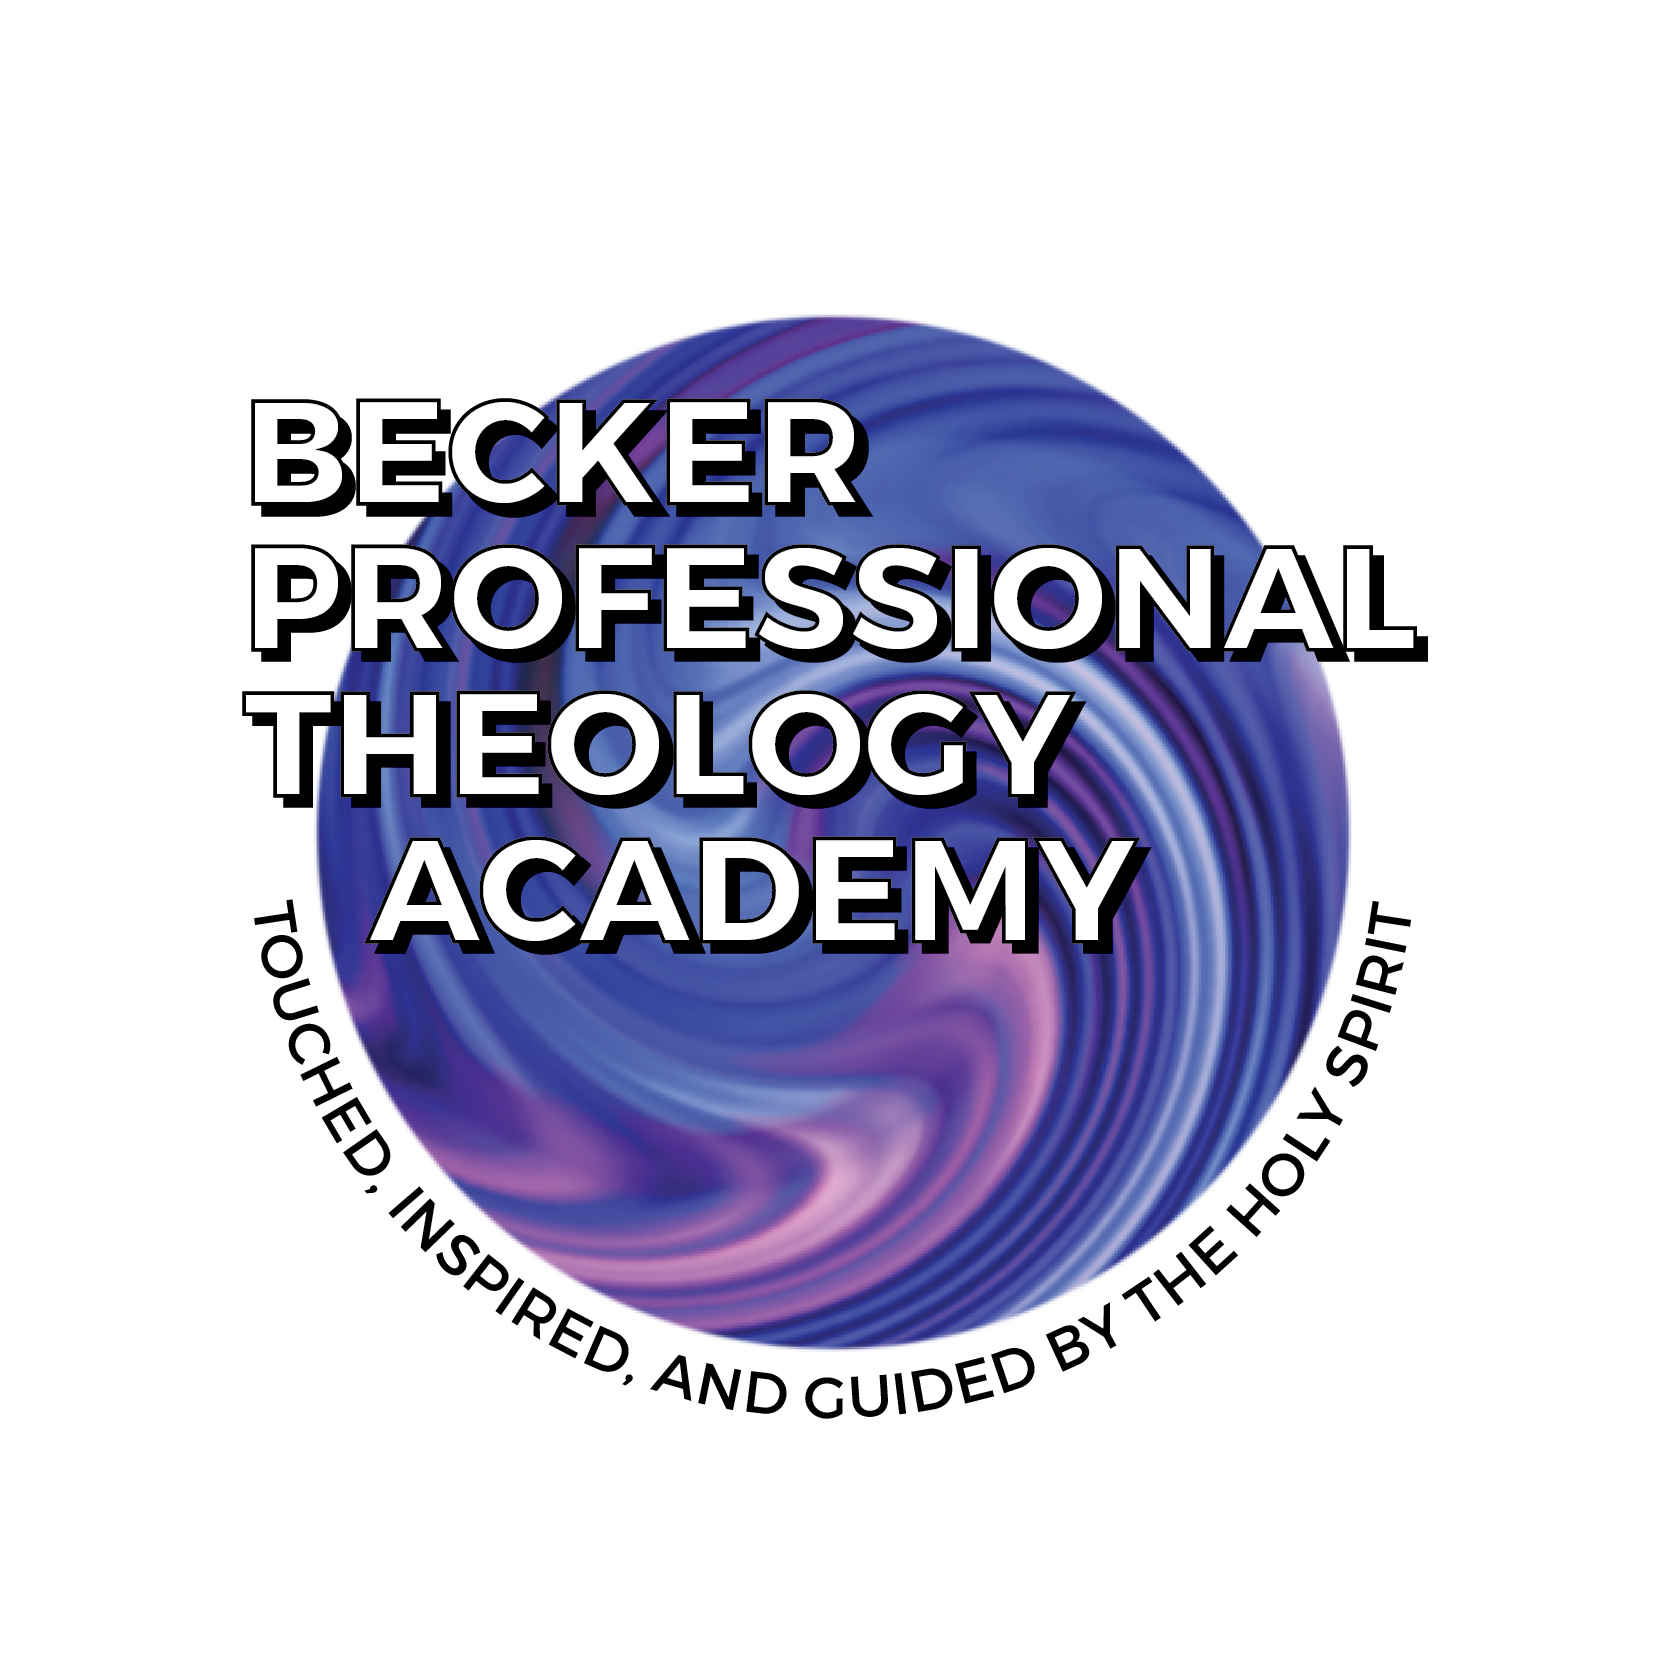 Becker Professional Theology Academy